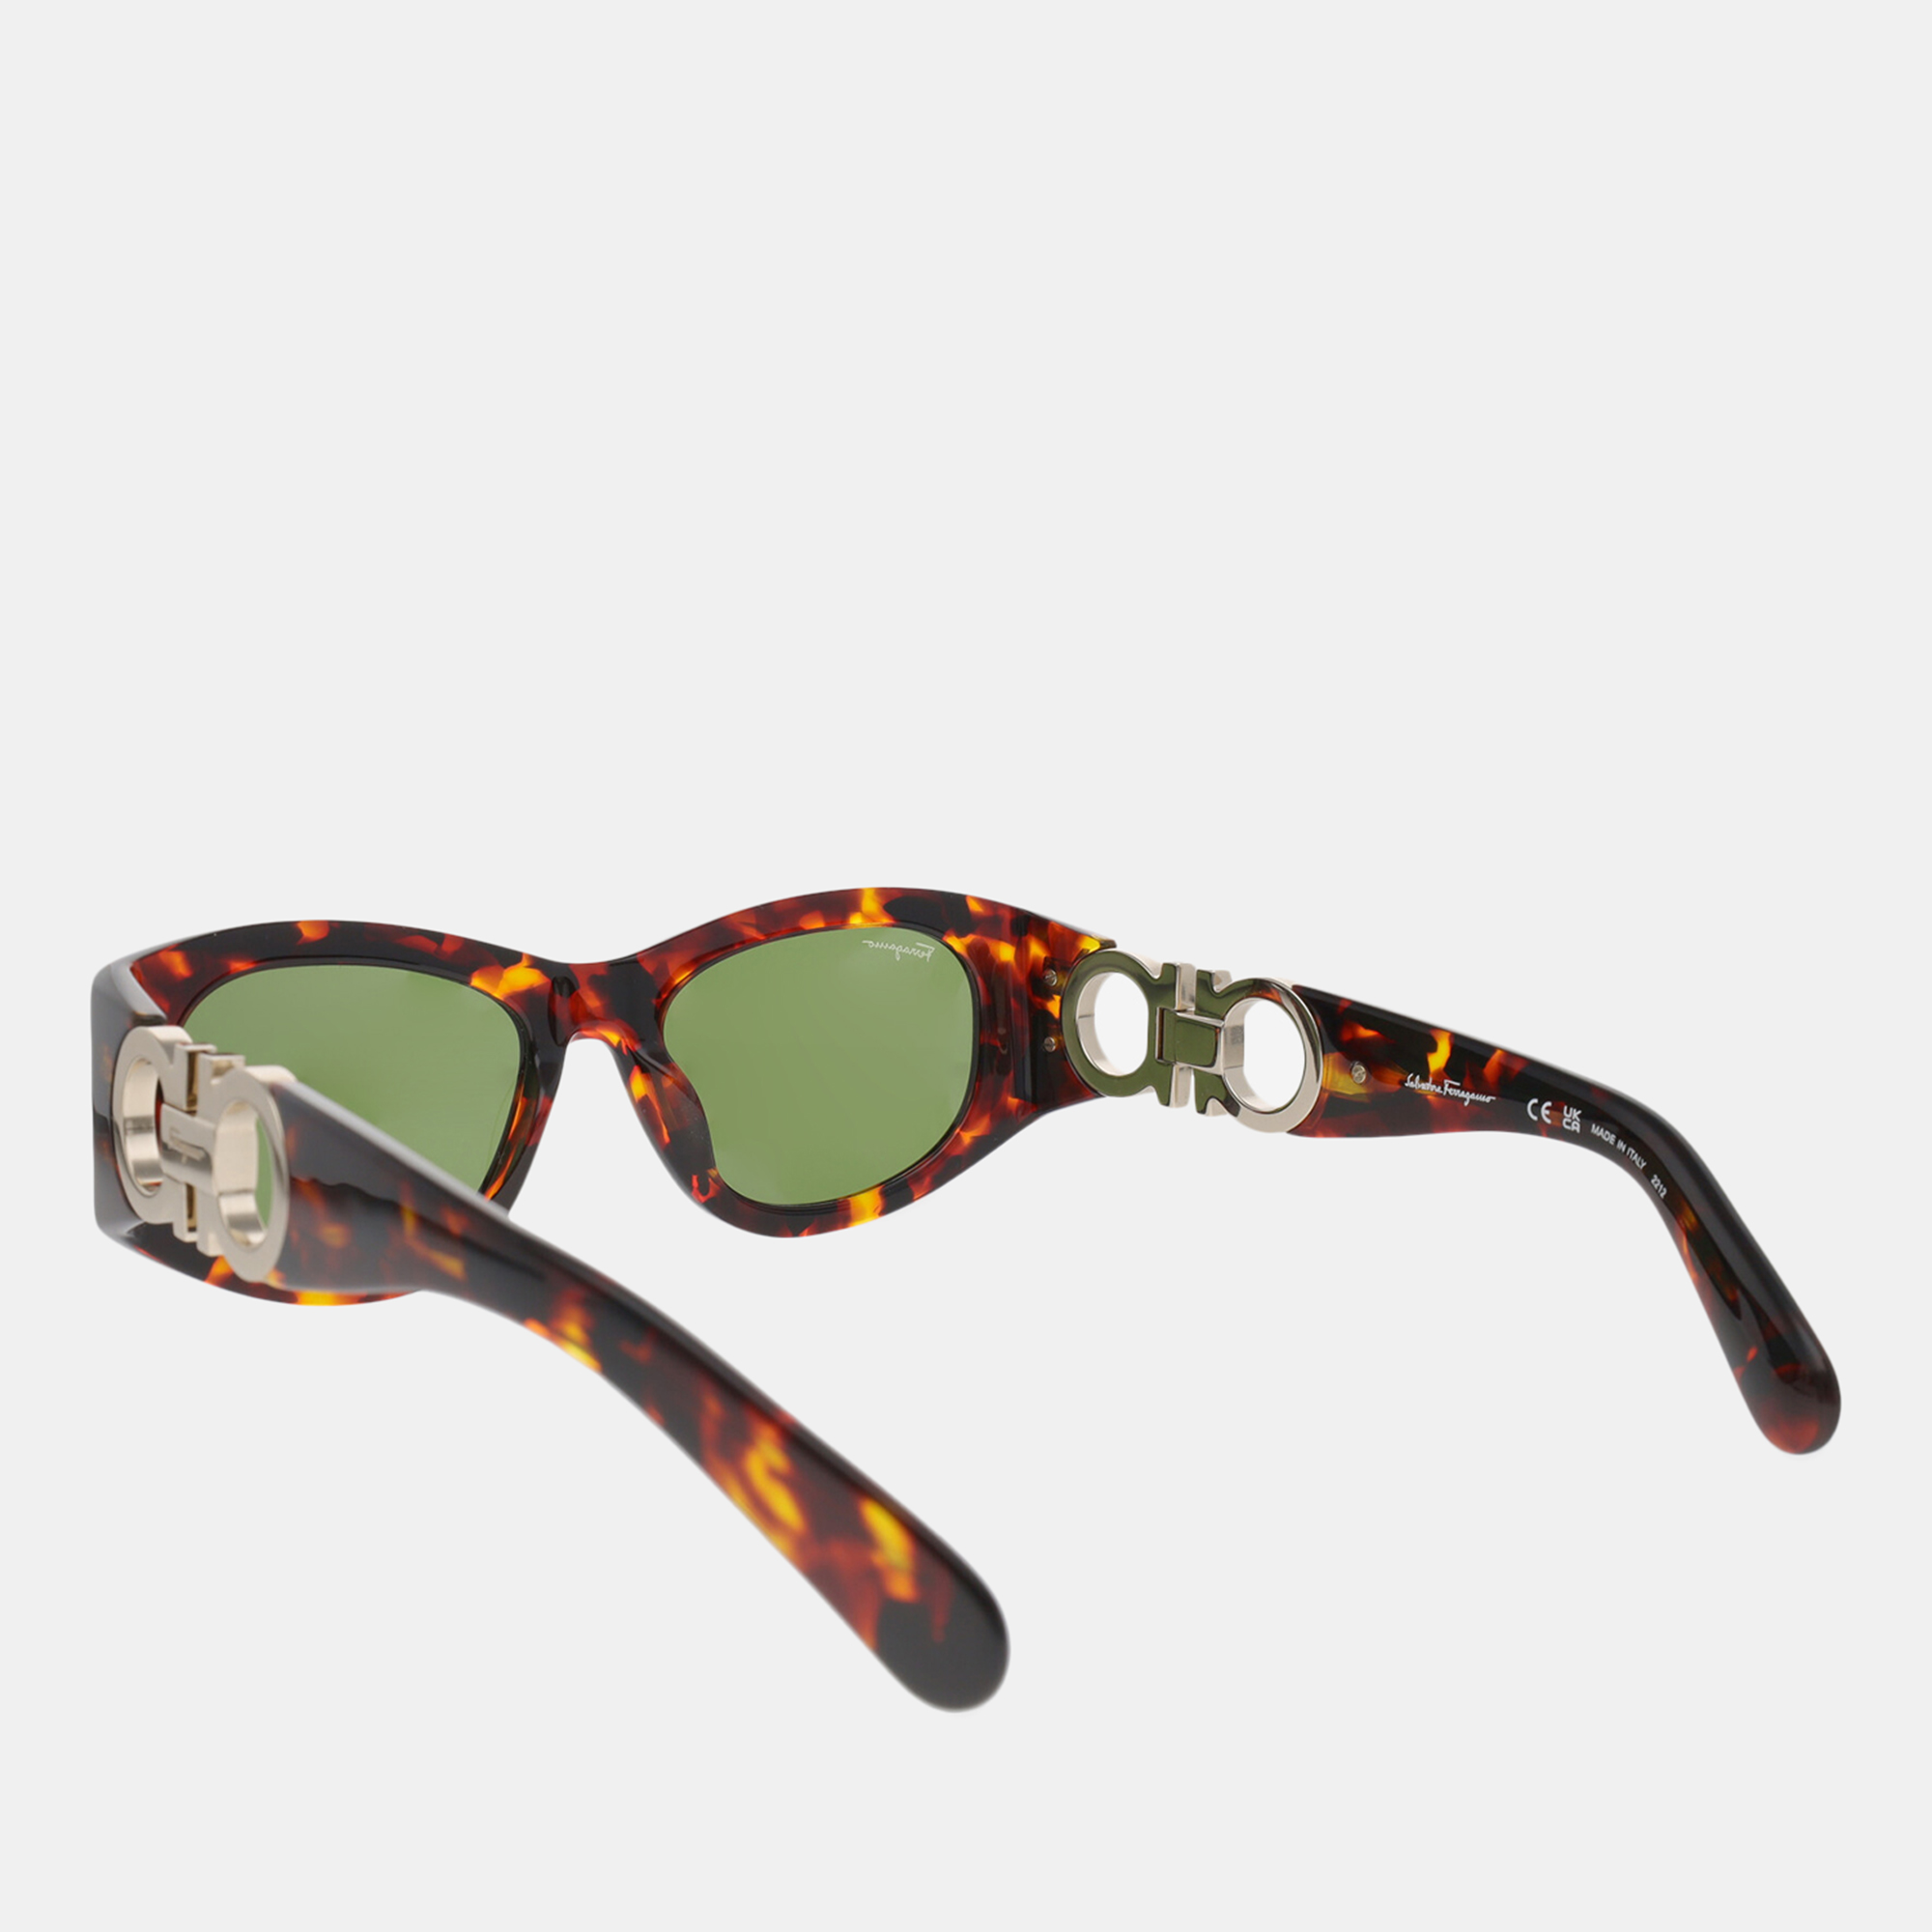 Salvatore Ferragamo  Women's Synthetic Fibers Cat-Eye Frame Sunglasses - Brown - One Size